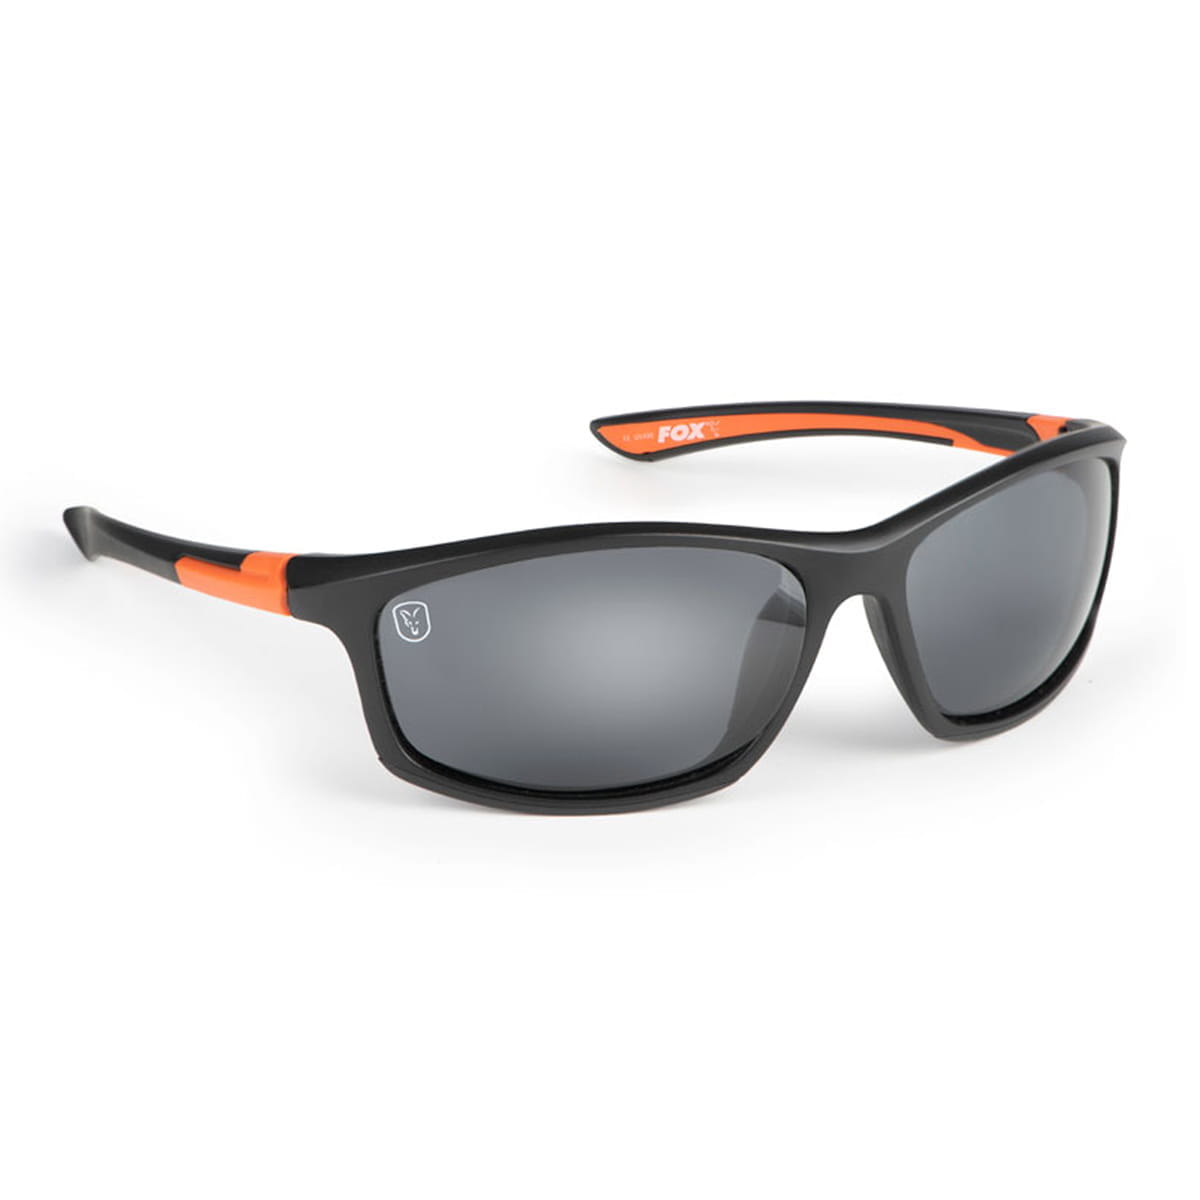 Black-Orange Sunglasses